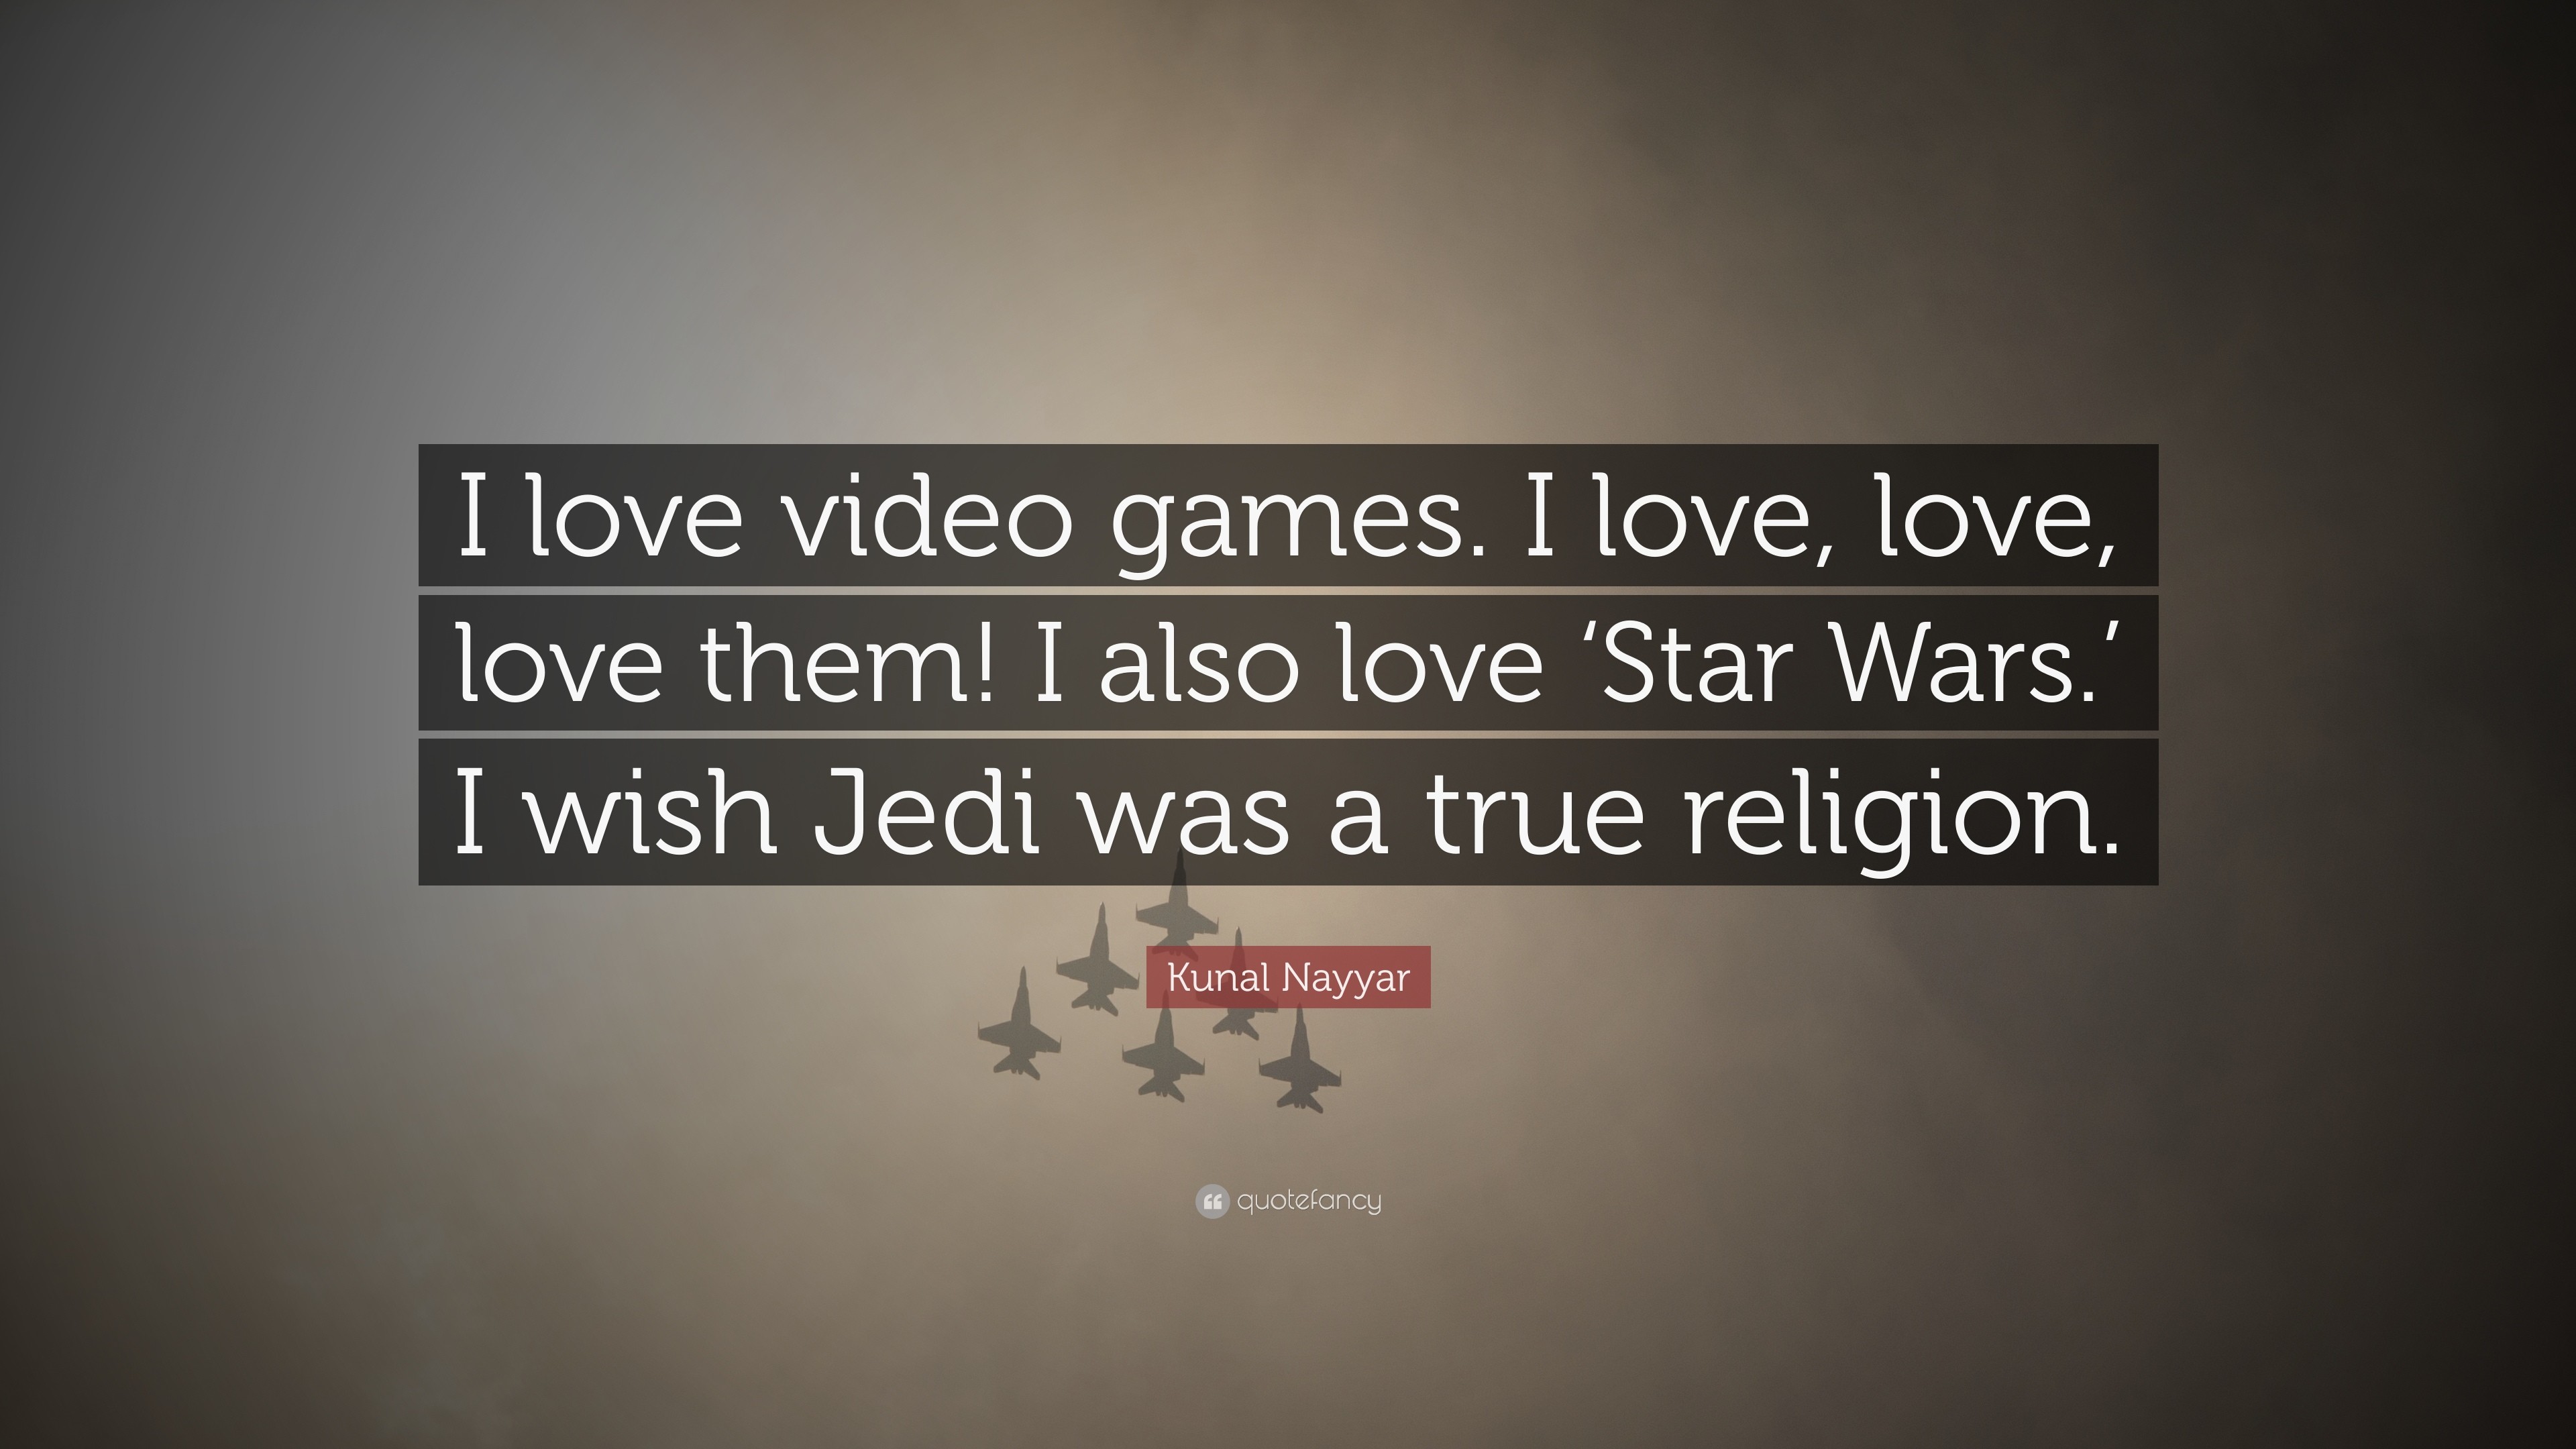 3840x2160 Kunal Nayyar Quote: “I love video games. I love, love, love